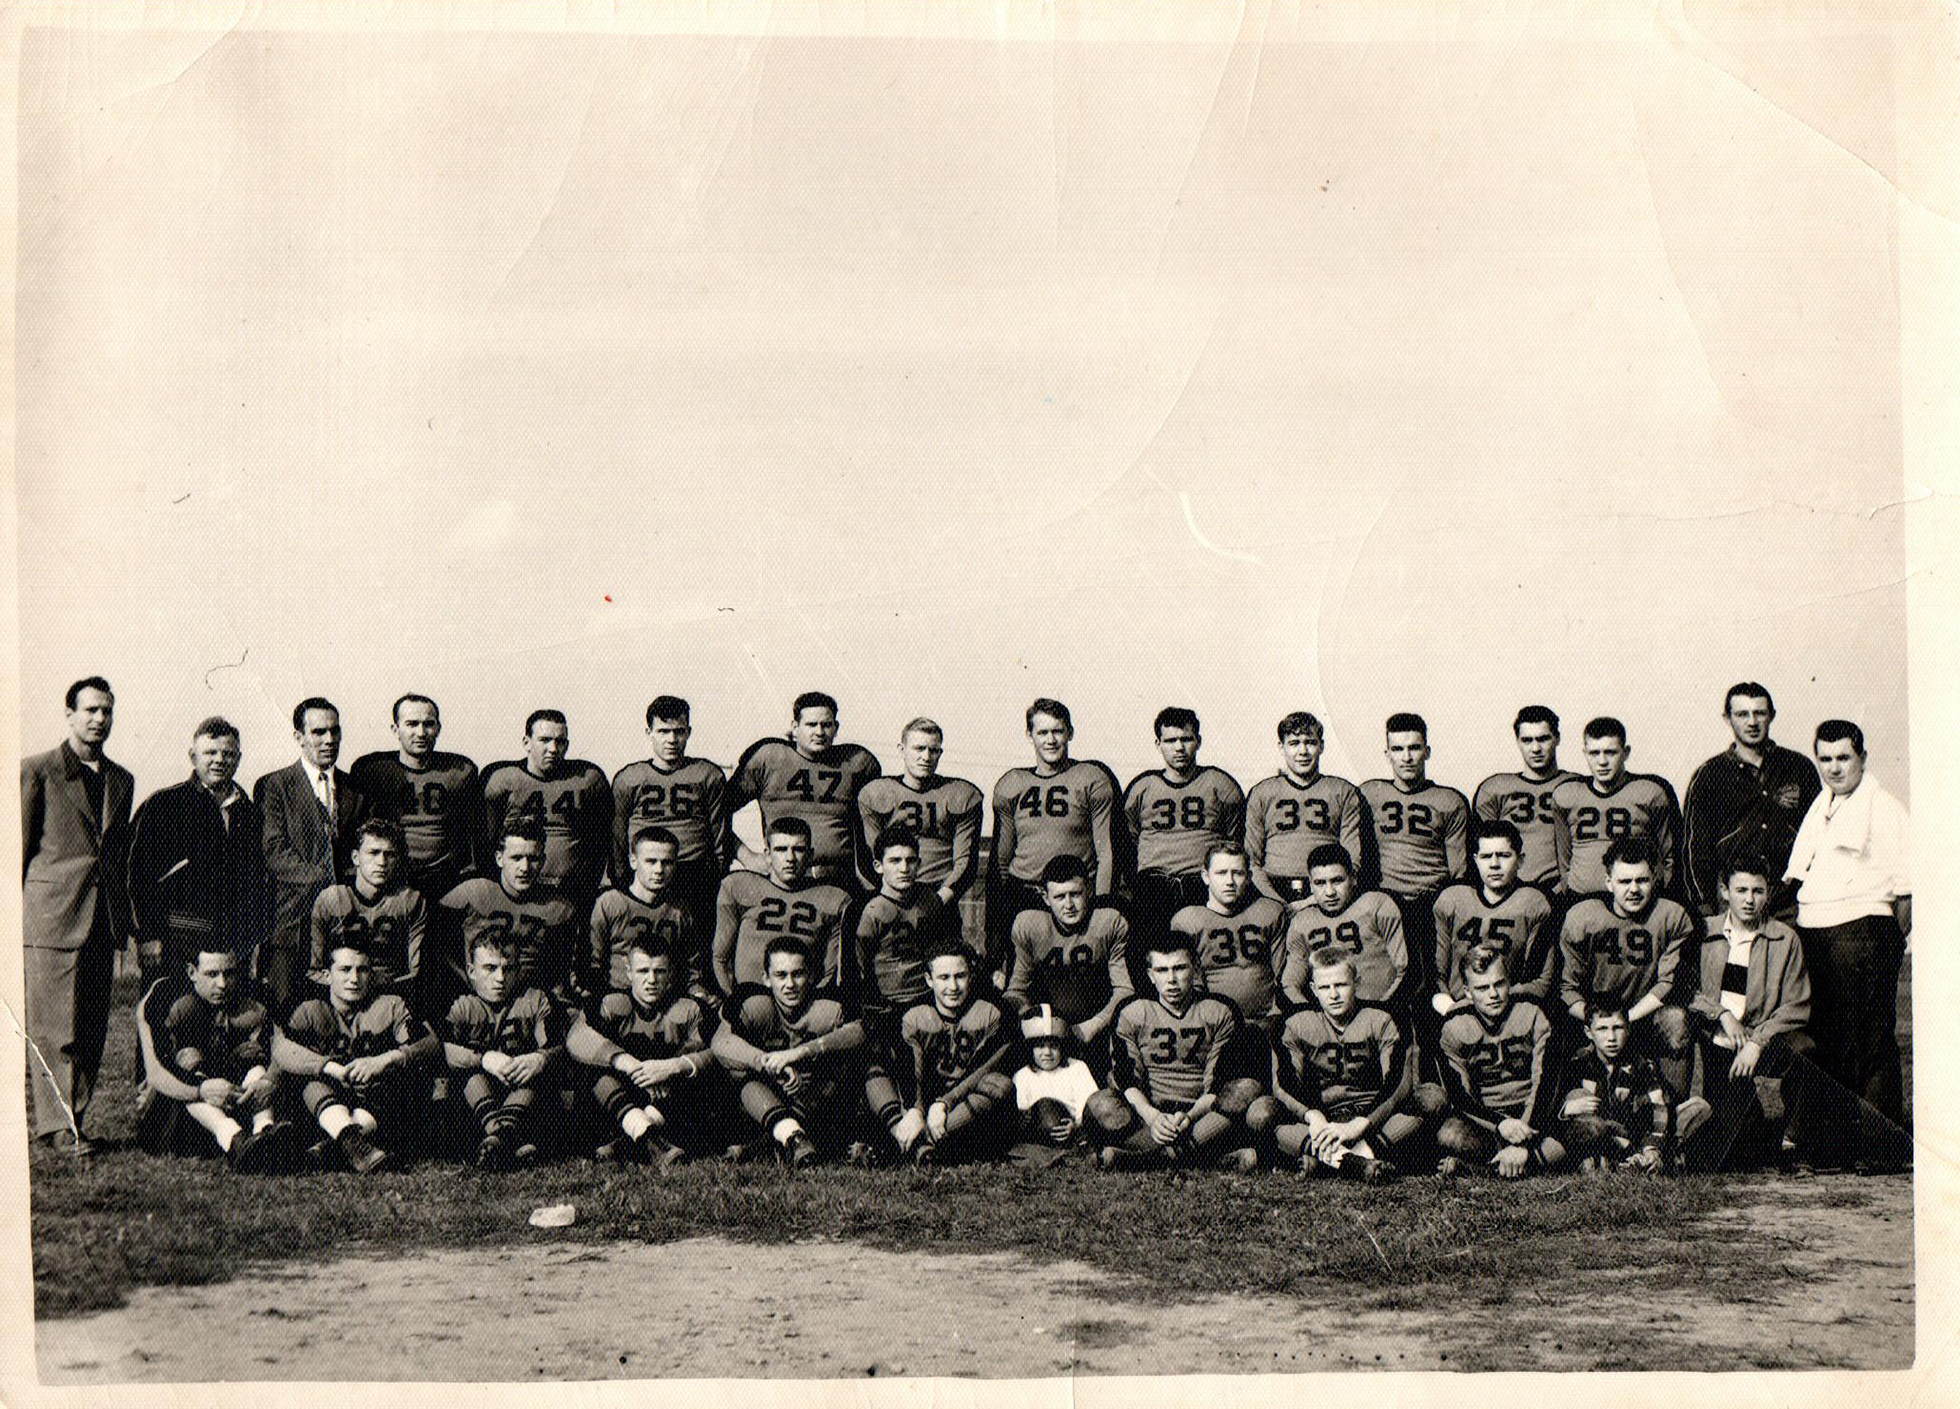 The 1950 Little Chute Flying Dutchmen team photo